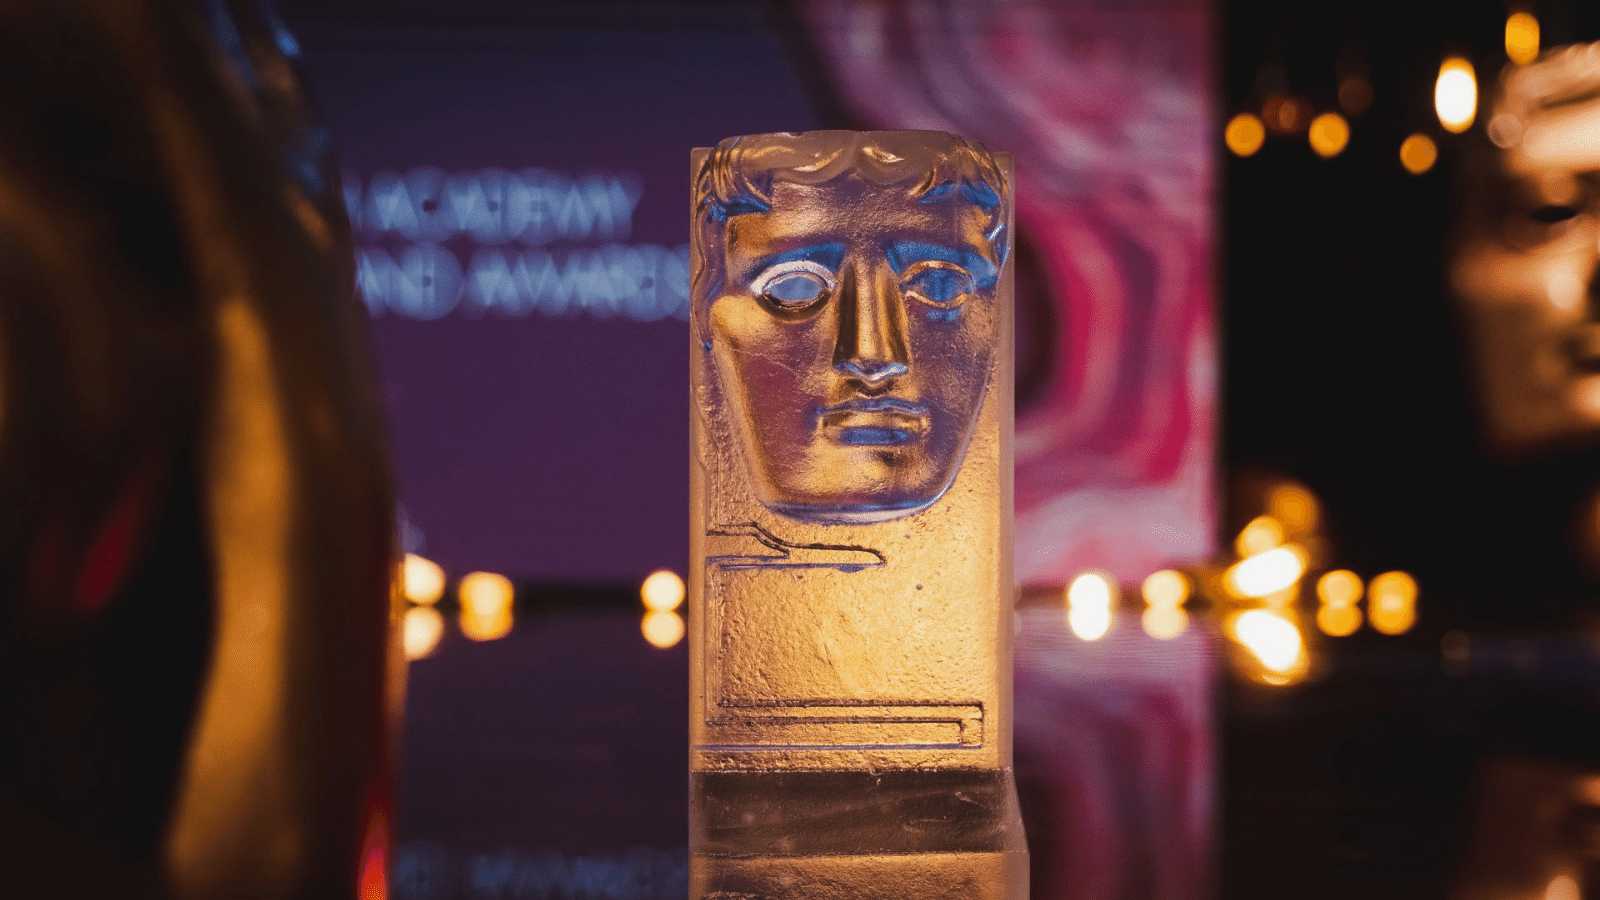 BAFTA Scotland audience award close up, with a purple lit background